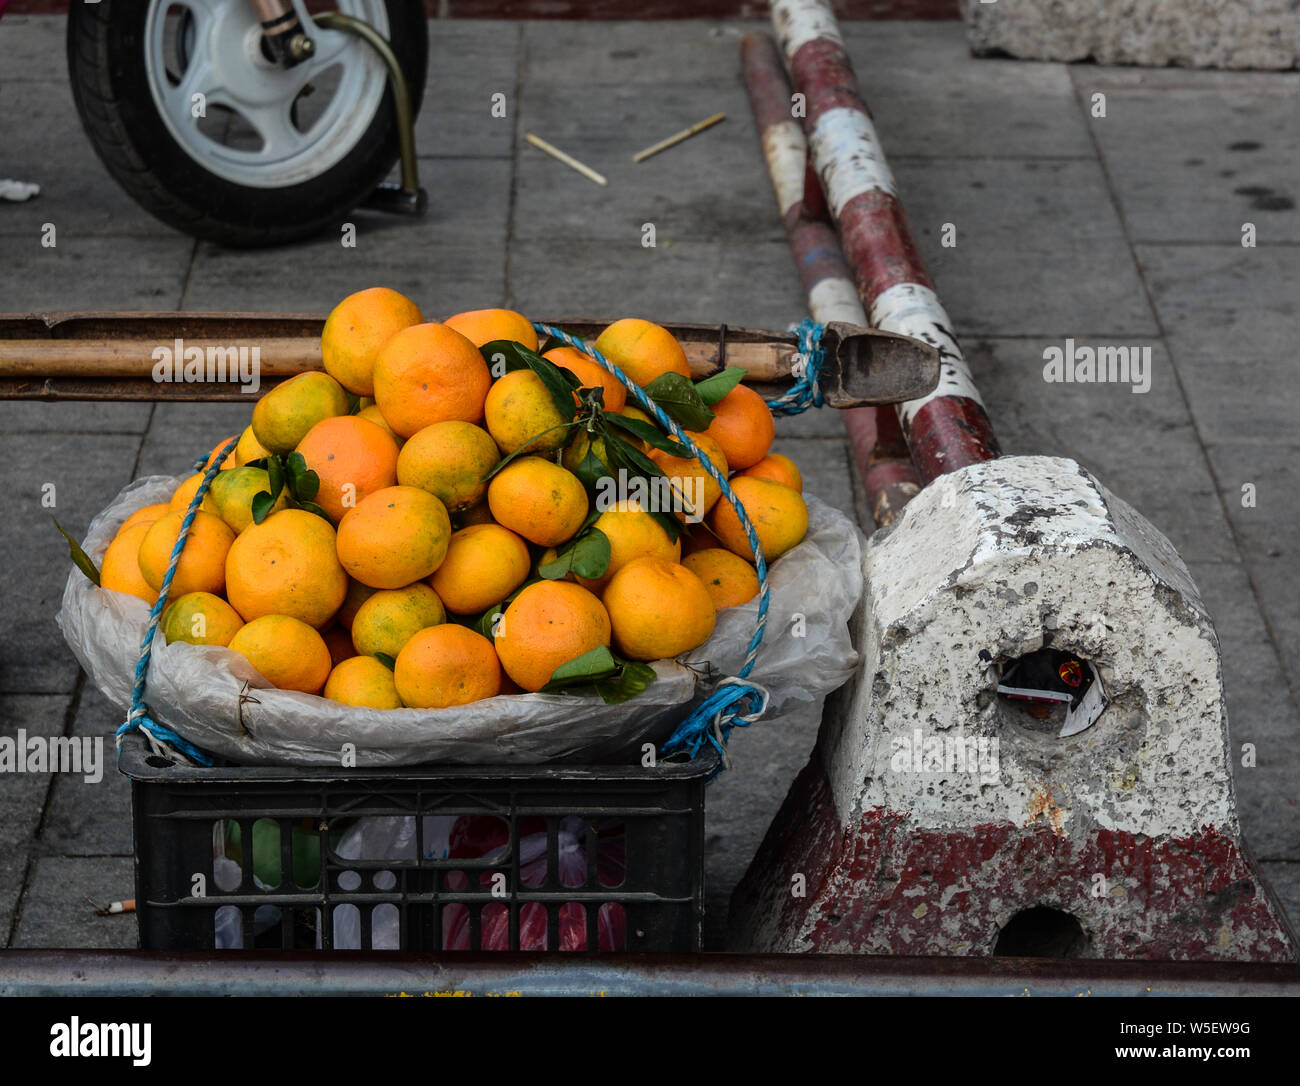 https://c8.alamy.com/comp/W5EW9G/ripe-and-tasty-mandarin-tangerine-for-sale-at-street-market-W5EW9G.jpg